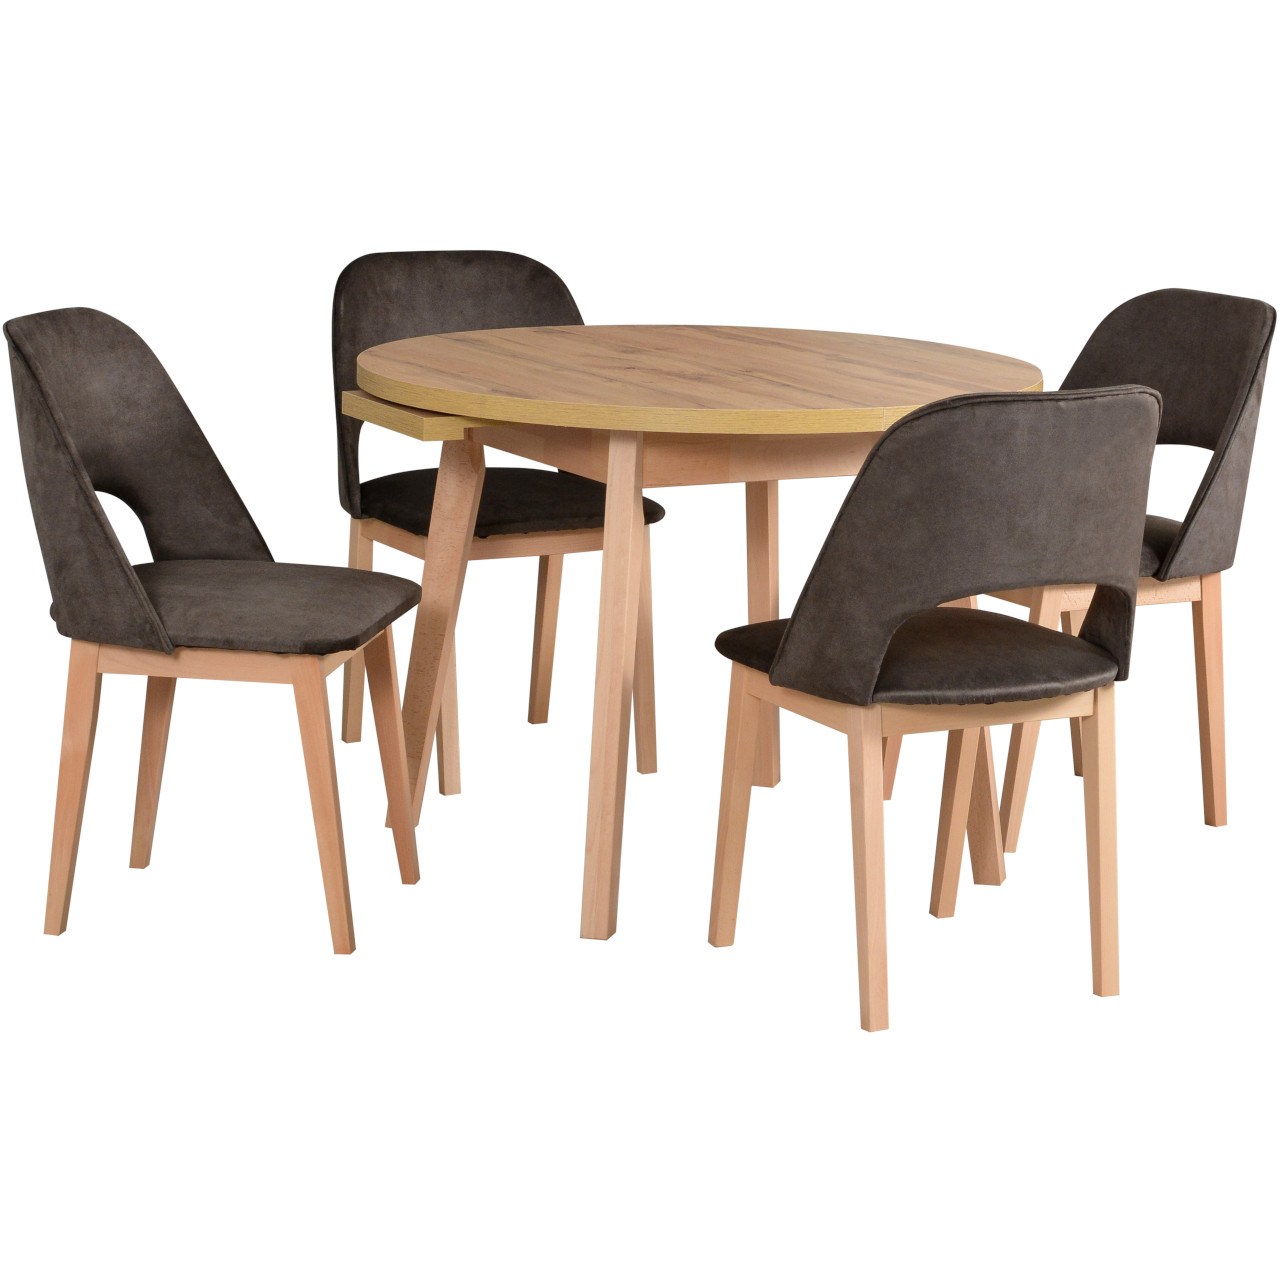 Table OSLO 3 L wotan laminate / beech + chairs MONTI 2 (4 pcs.) natural beech / 22B